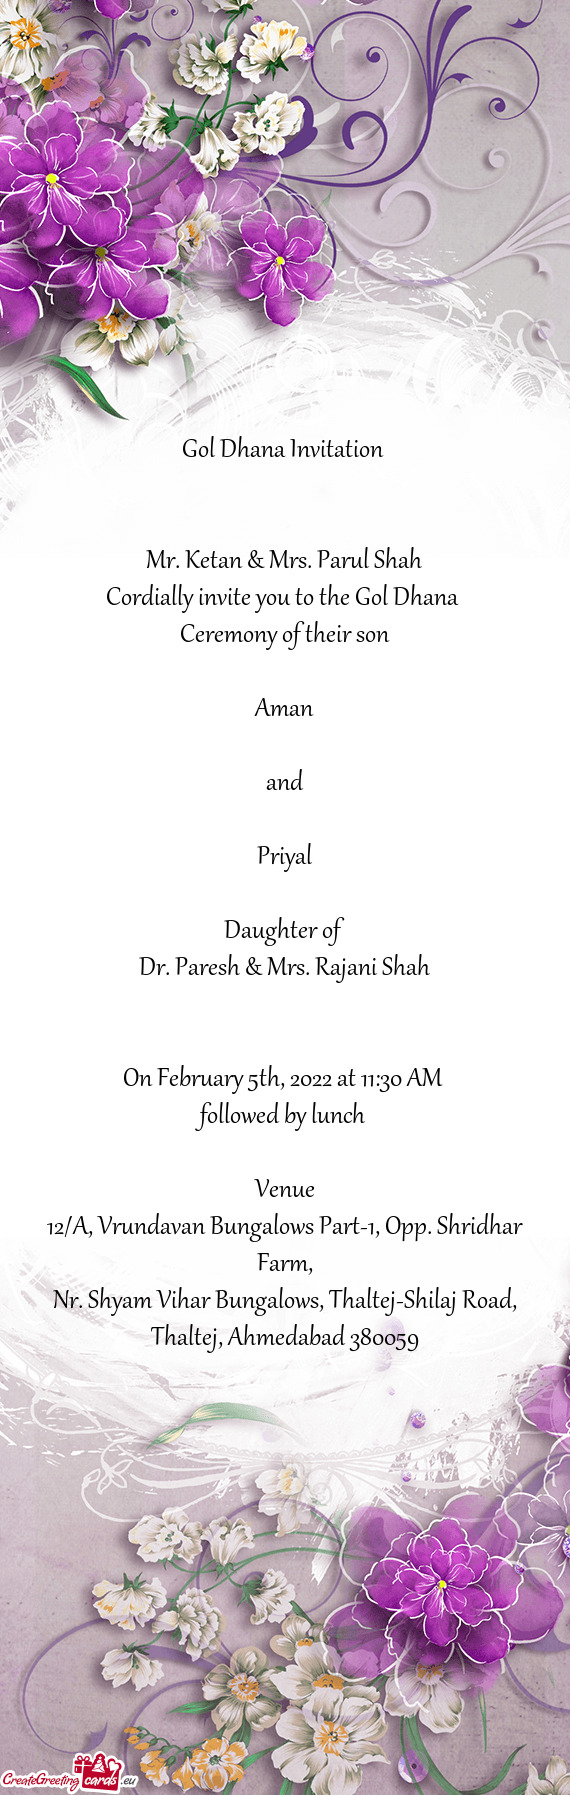 Mr. Ketan & Mrs. Parul Shah